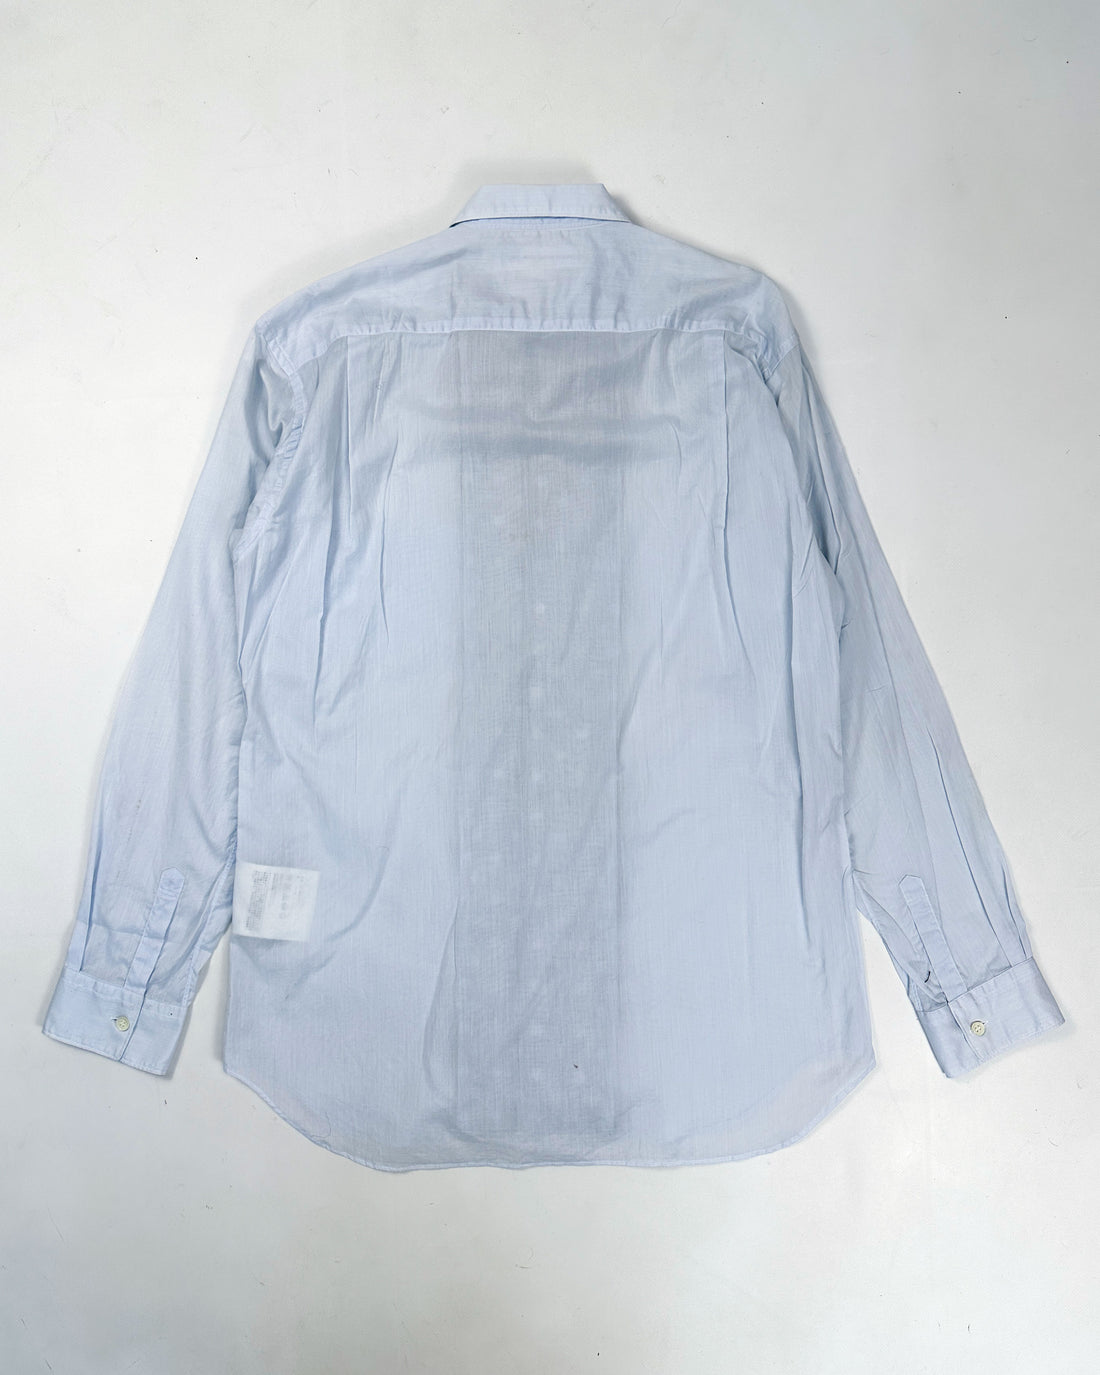 Comme des Garçons Shirt 2-Layer Translucid Blue Shirt 2006